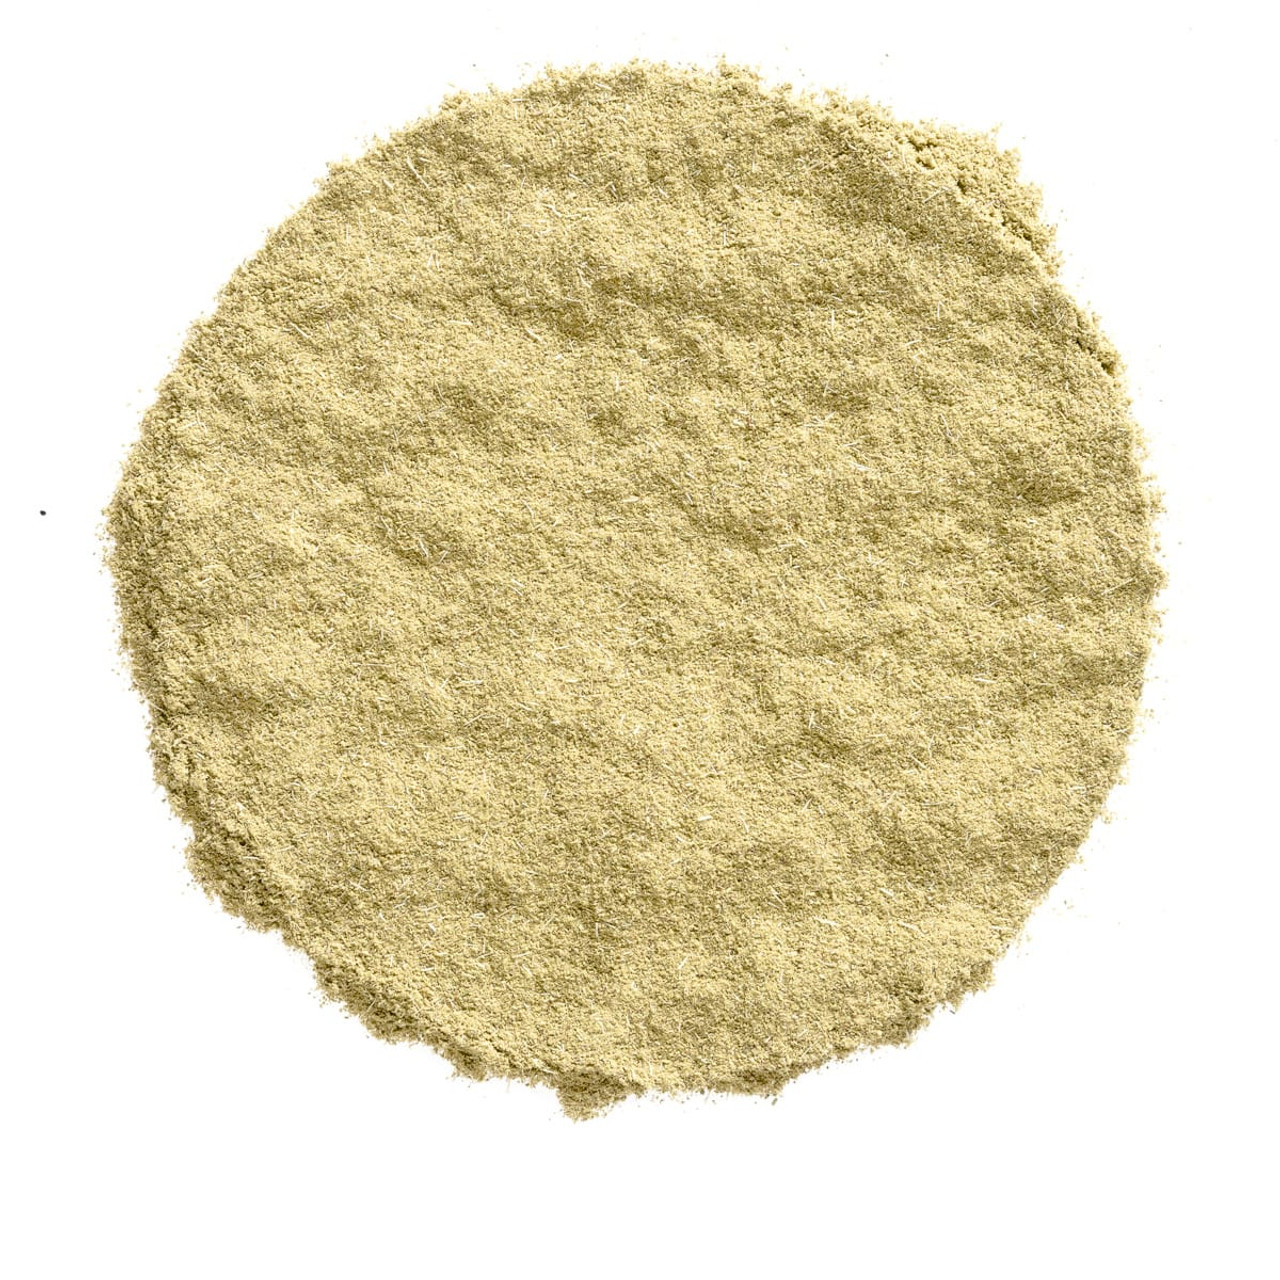 Gumbo File Powder - Bulk Wholesale Bulk 50 lb - My Spice Sage